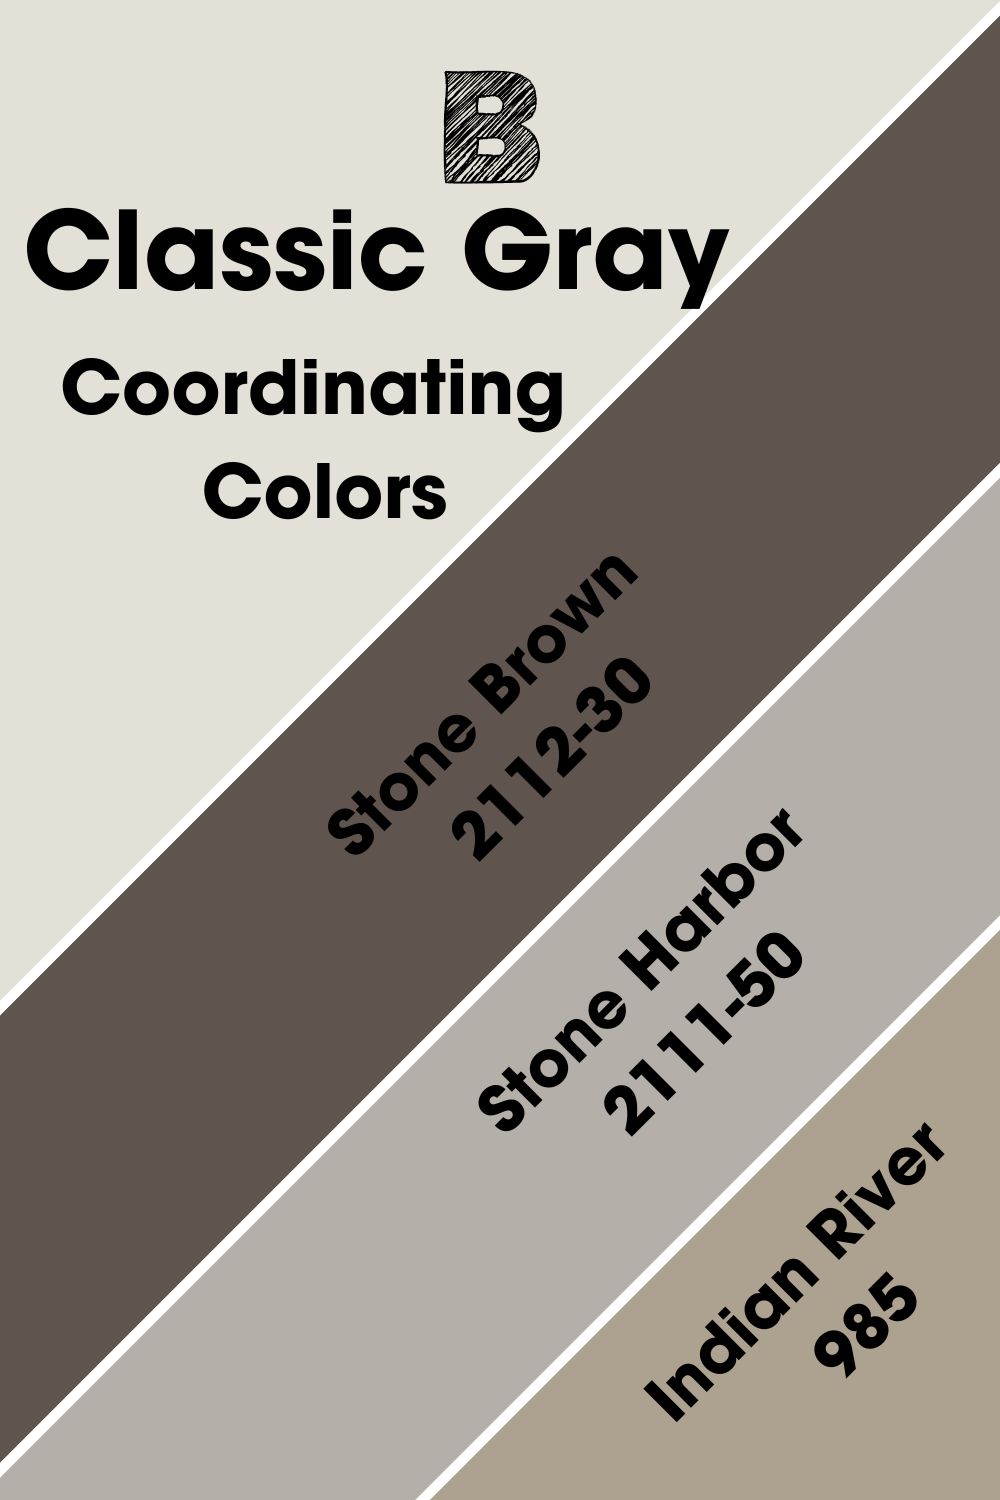 Benjamin Moore Classic Gray Coordinating Colors